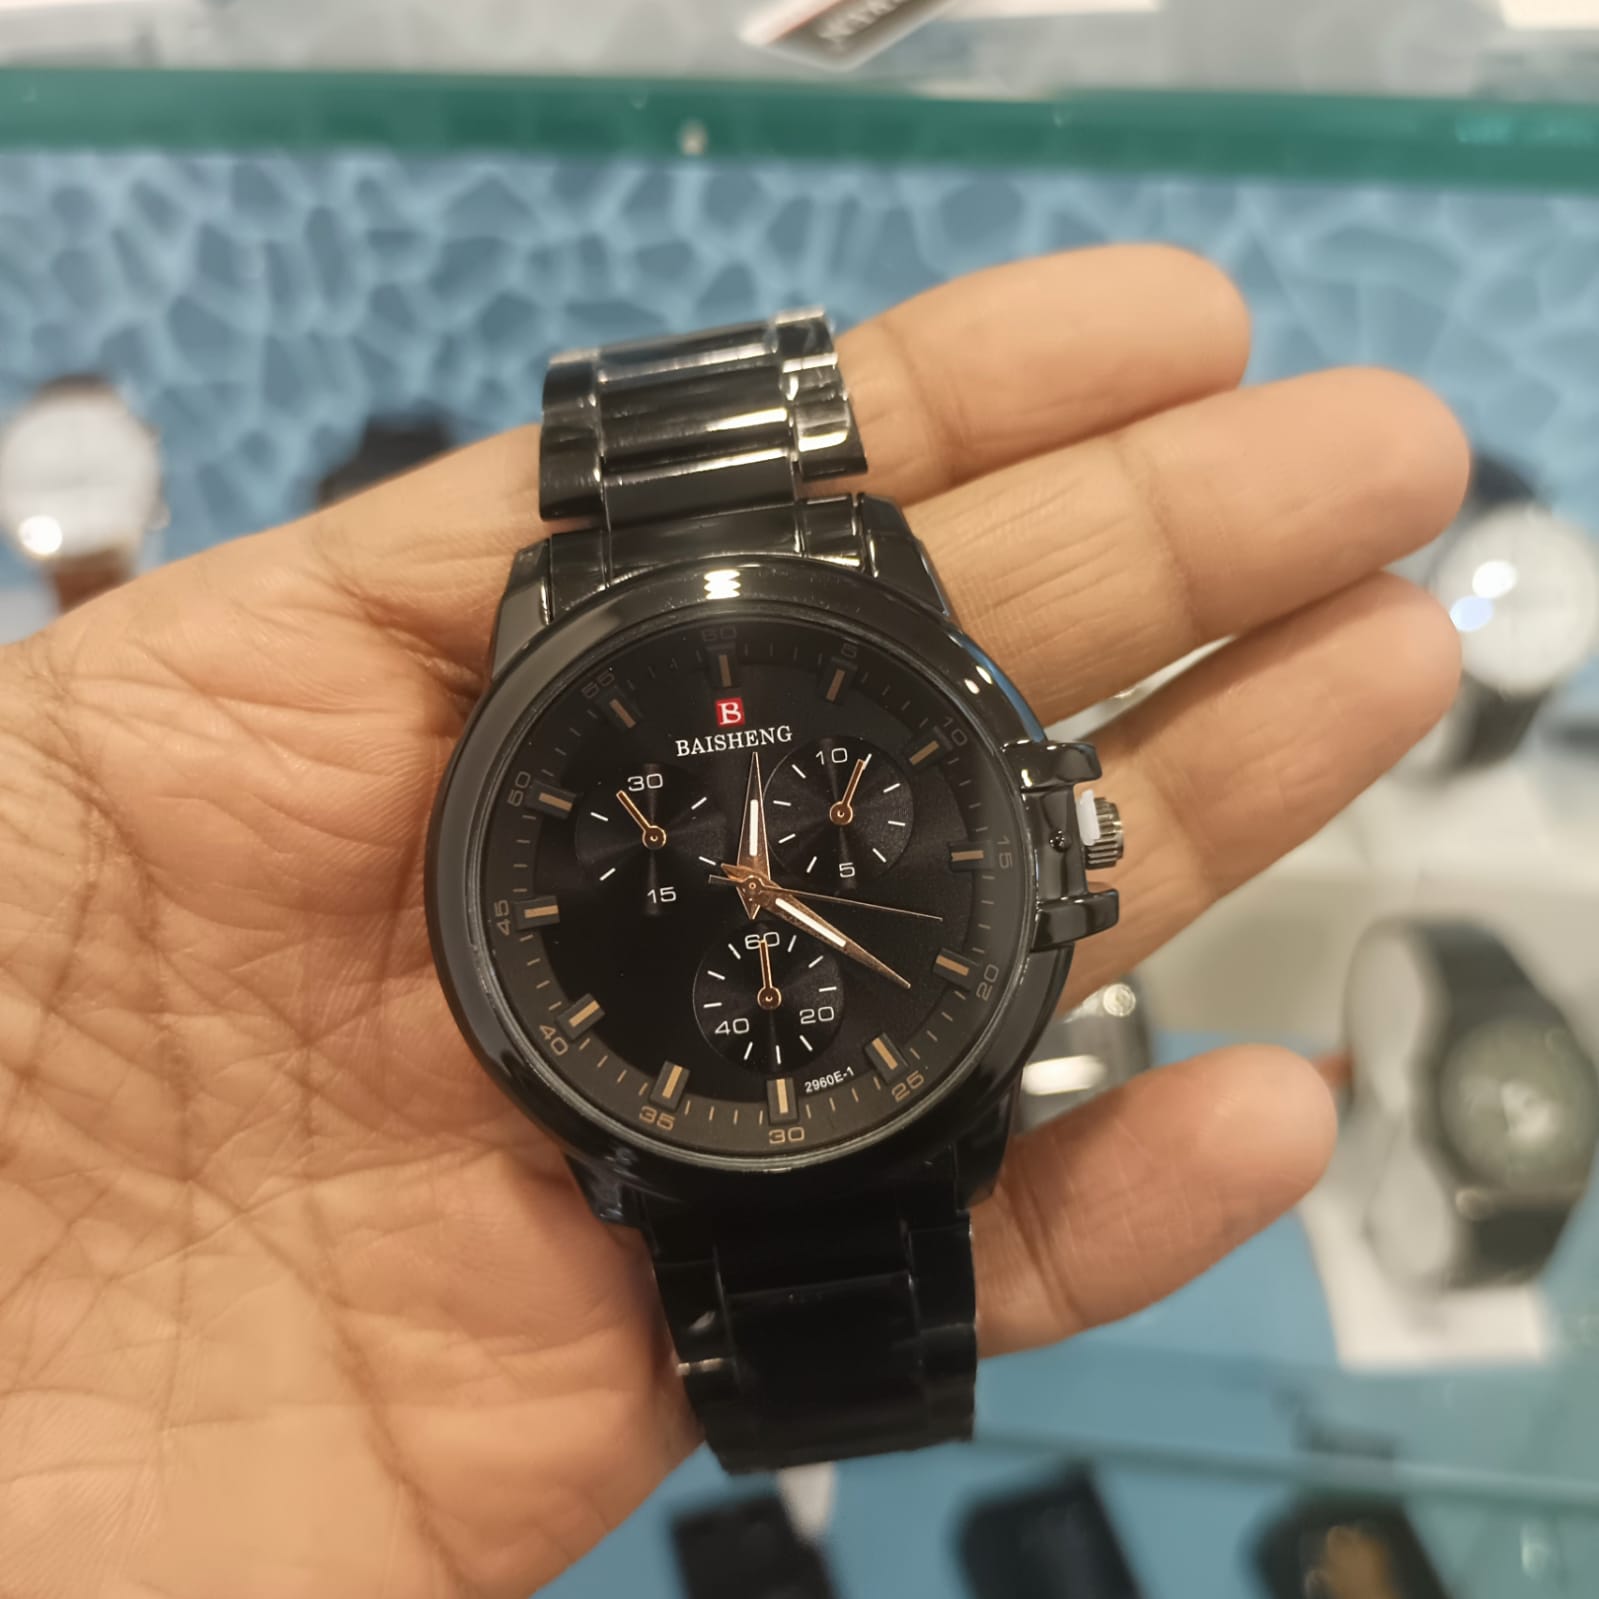 Buy BAISHENG Men Watch Designer wear Style Best Gift For Him!  (MJ01072016050) Online @ ₹799 from ShopClues